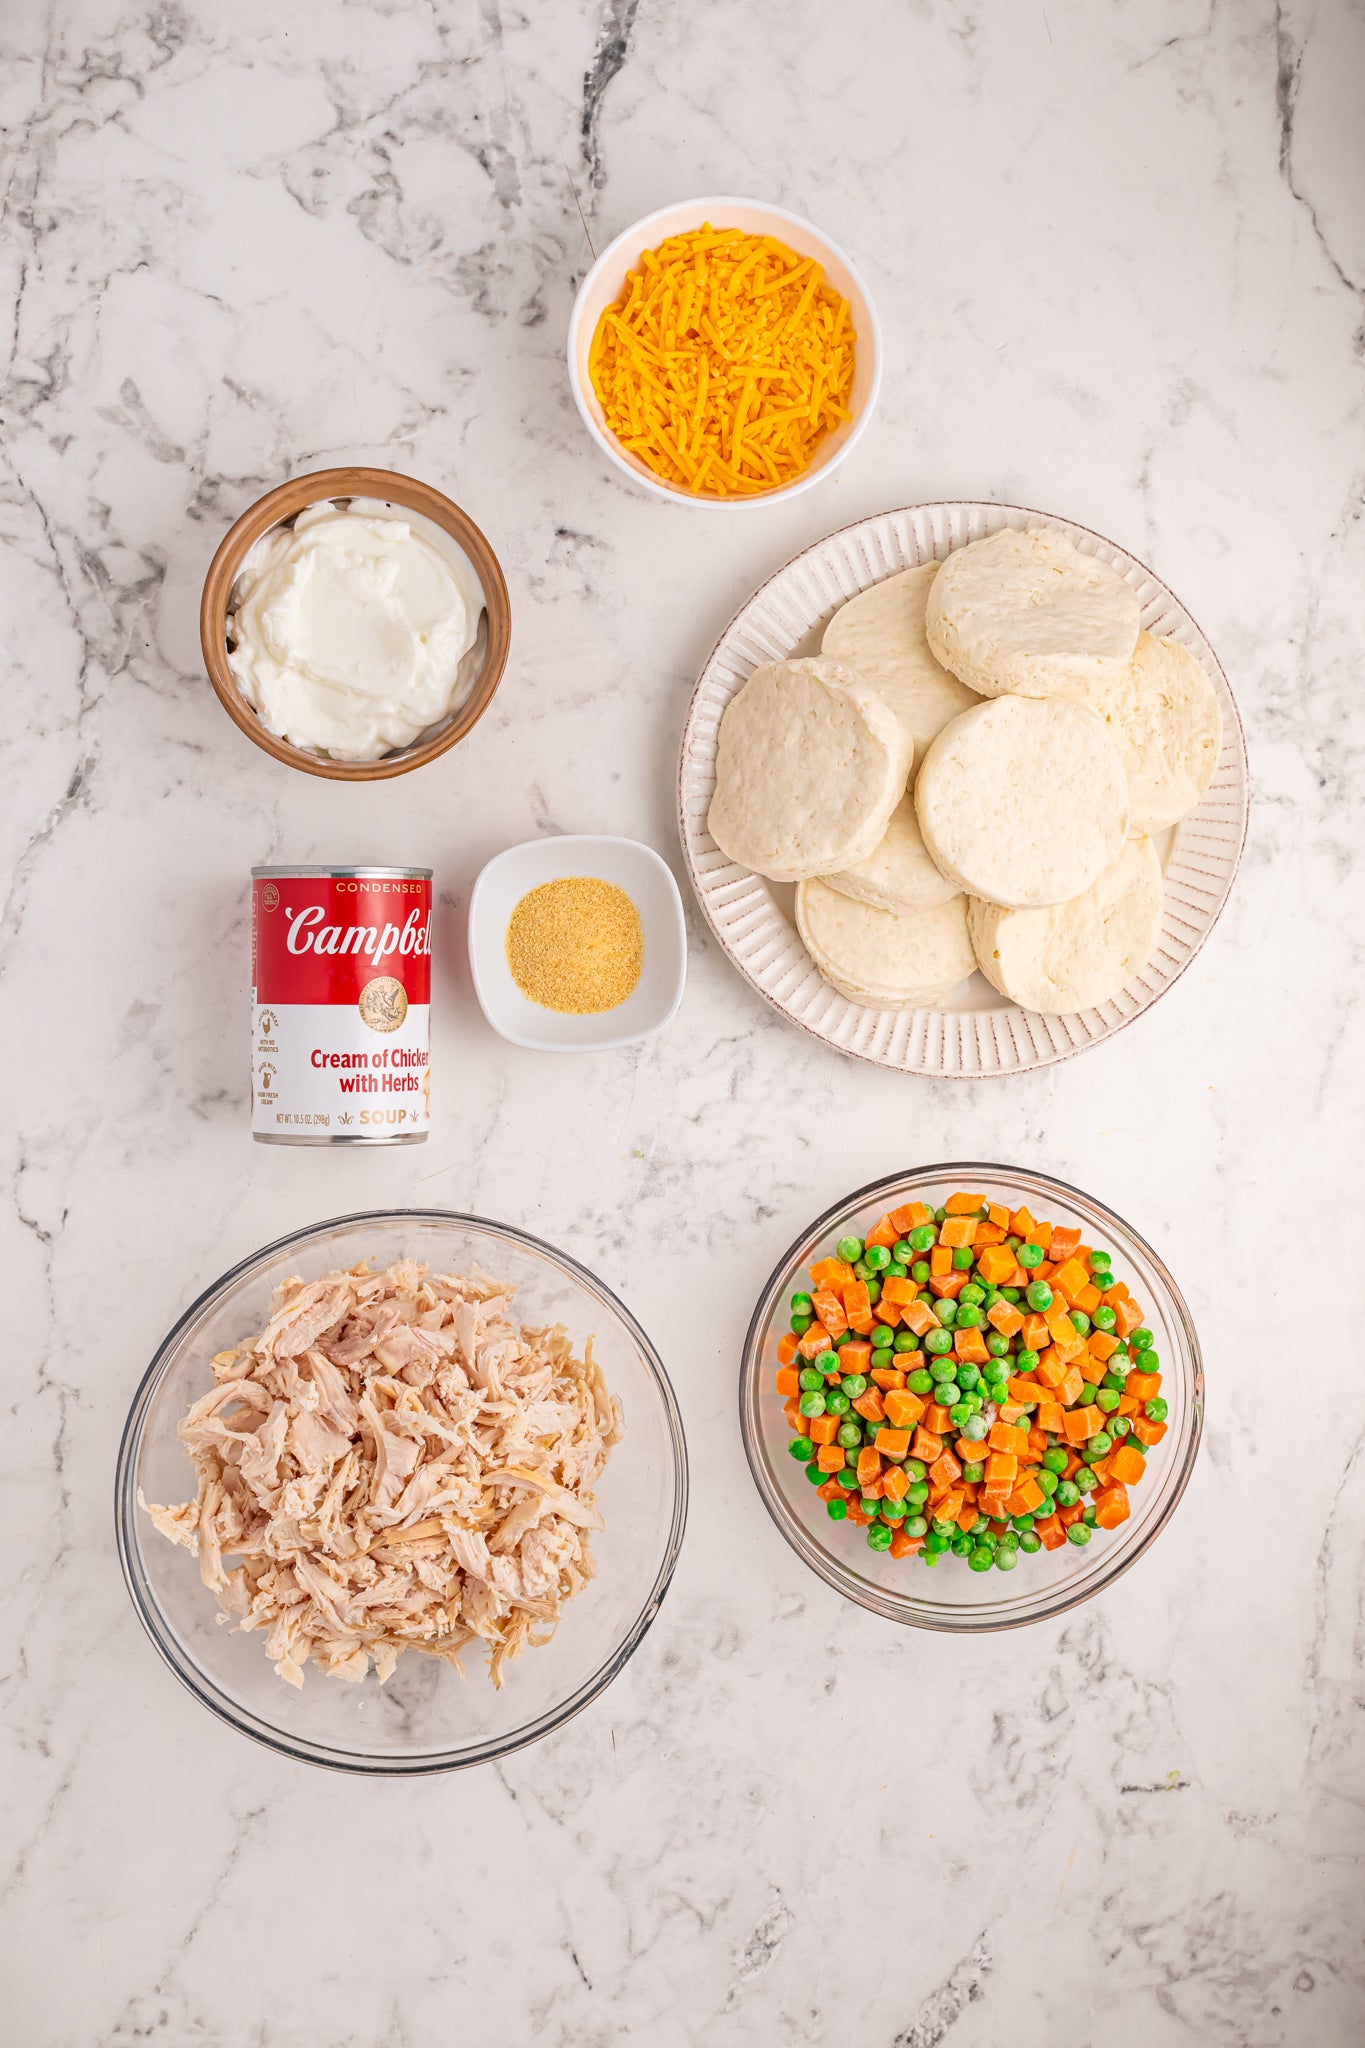 x SALE! Chicken Pot Pie Bake Set 1 - Semi-Exclusive Recipe